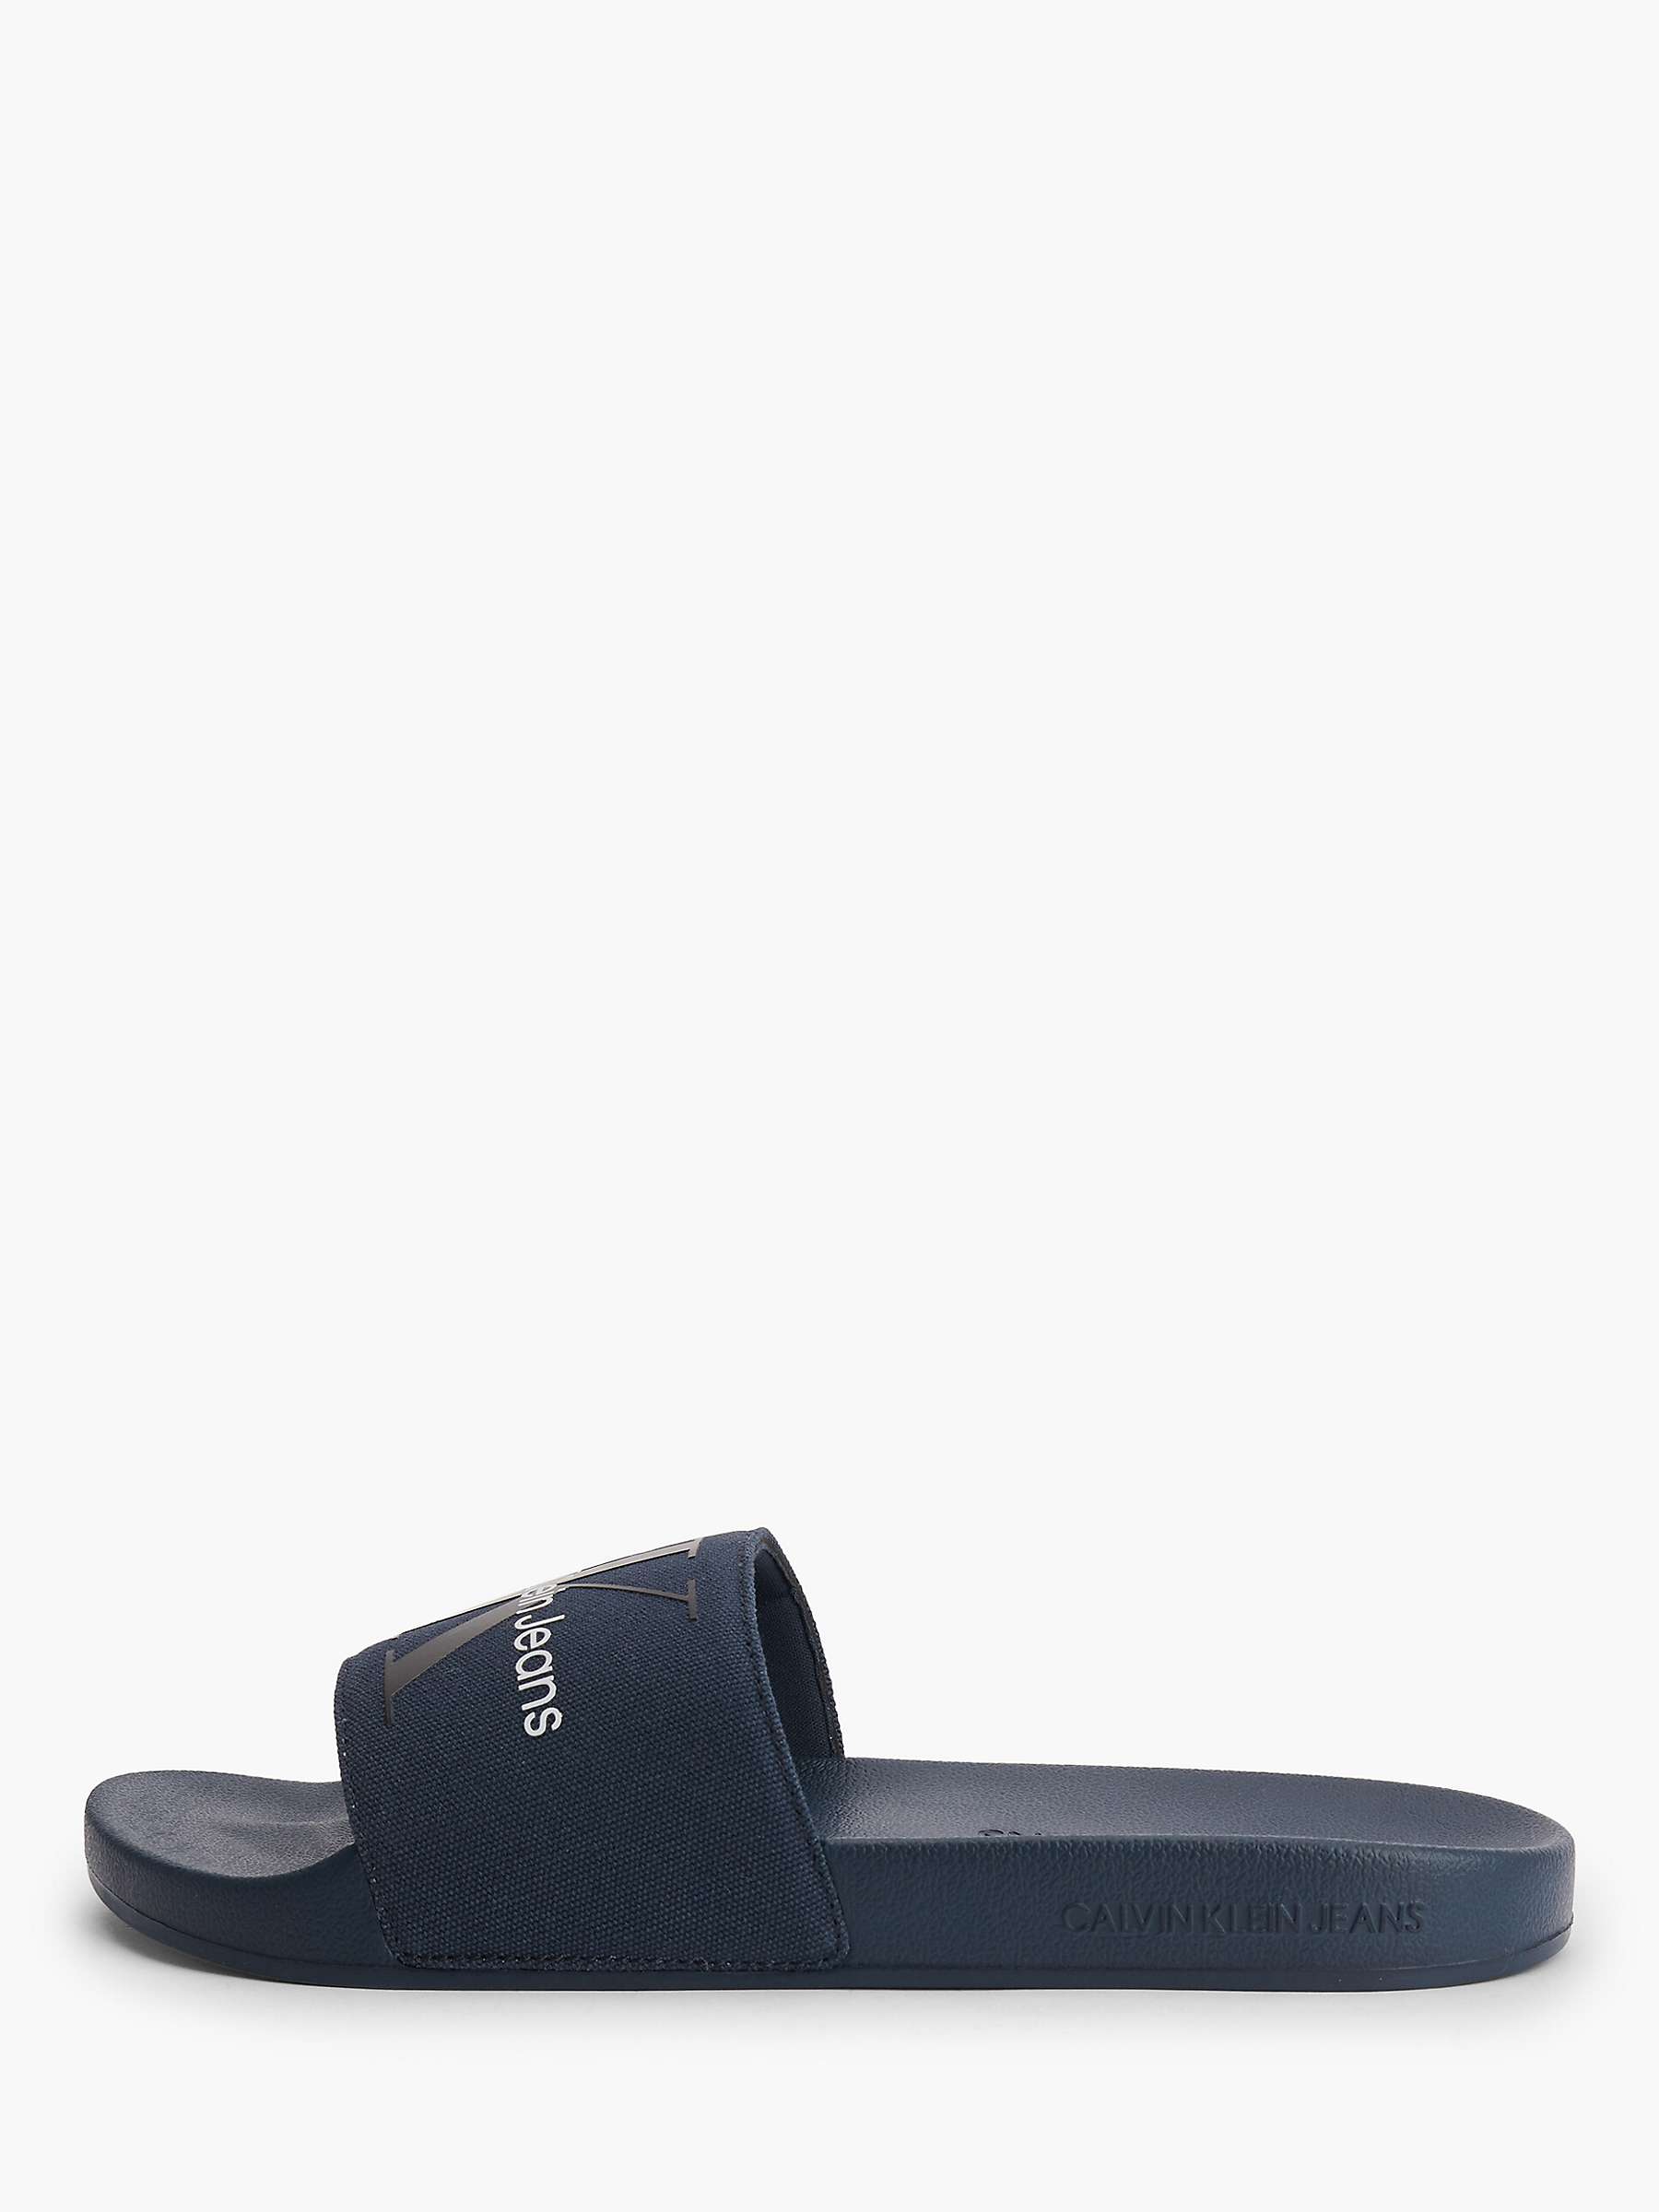 Calvin Klein Monogram Slider Sandals, Ocean Teal at John Lewis & Partners